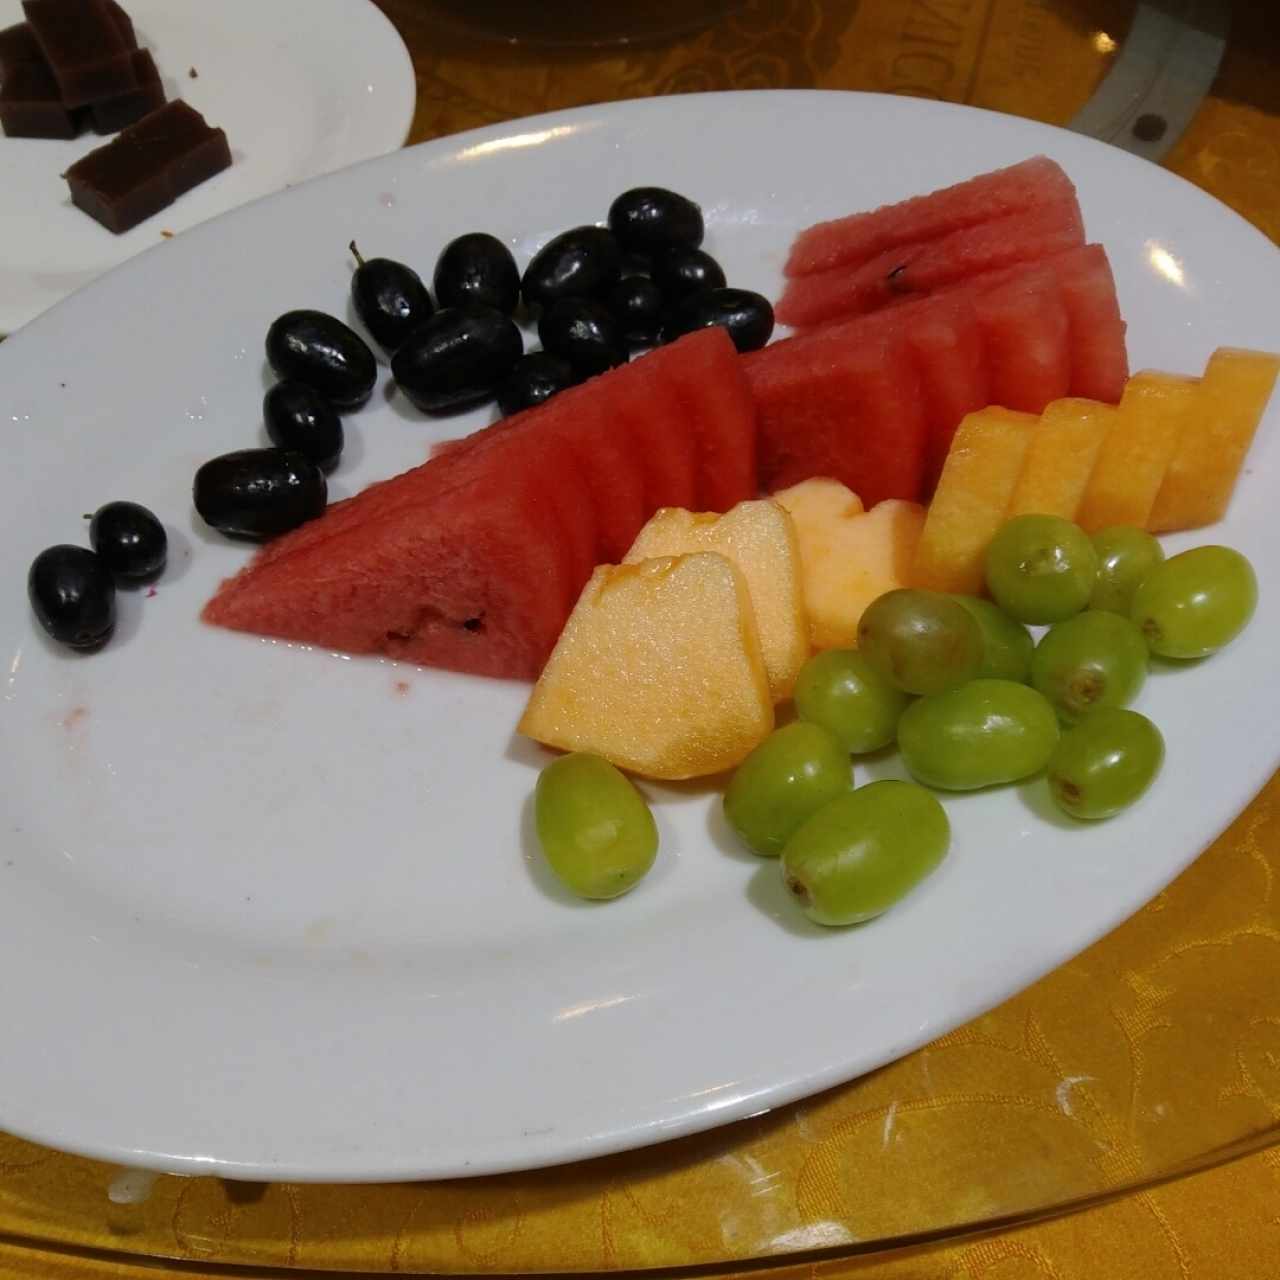 ensalada frutas melon sandia uvas verdes y negras